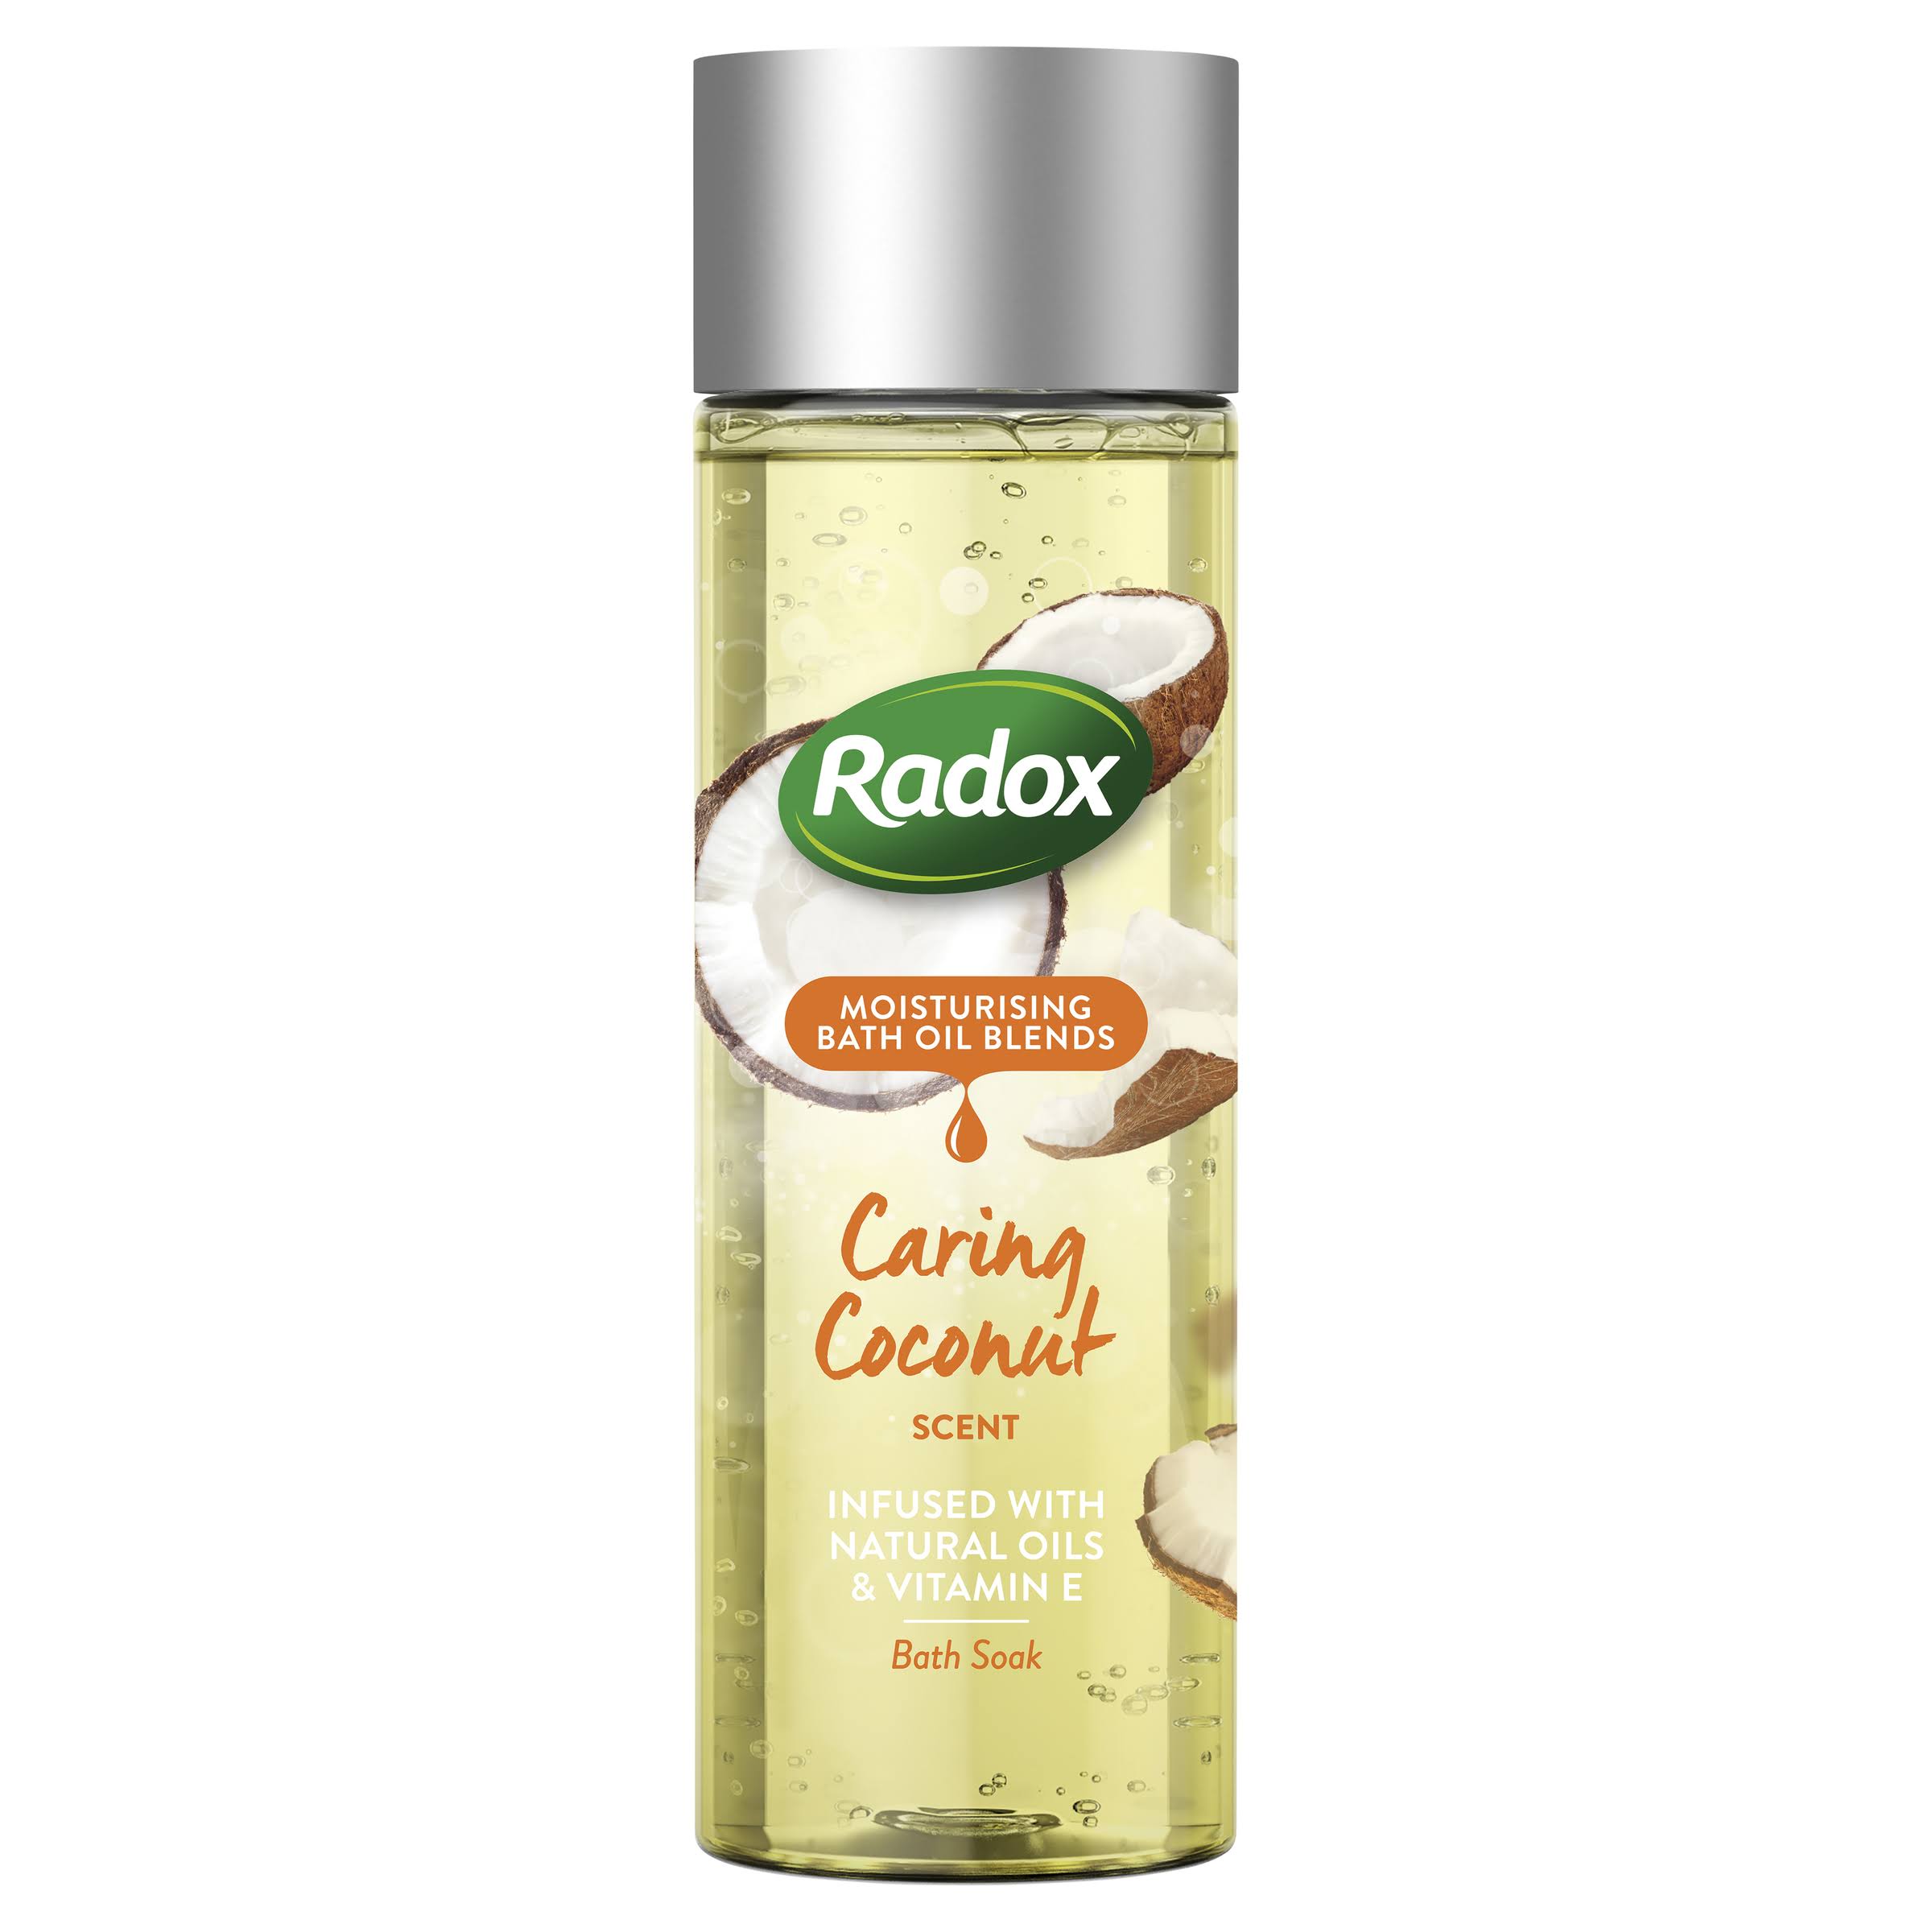 Radox Caring Coconut Scent Bath Soak - 200ml